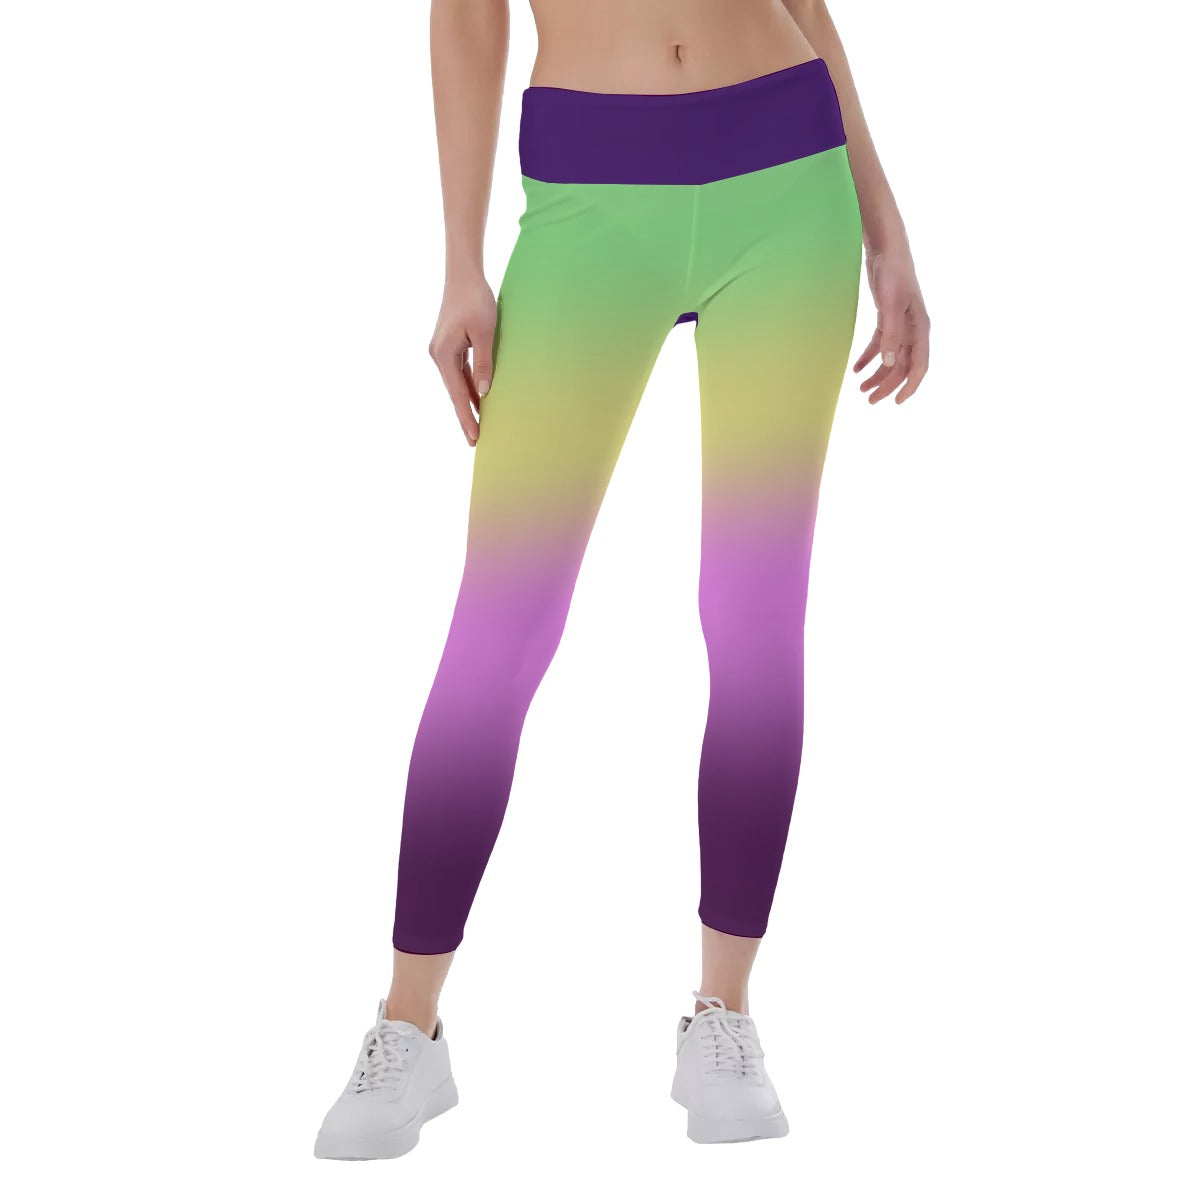  Colorful Yoga Pants